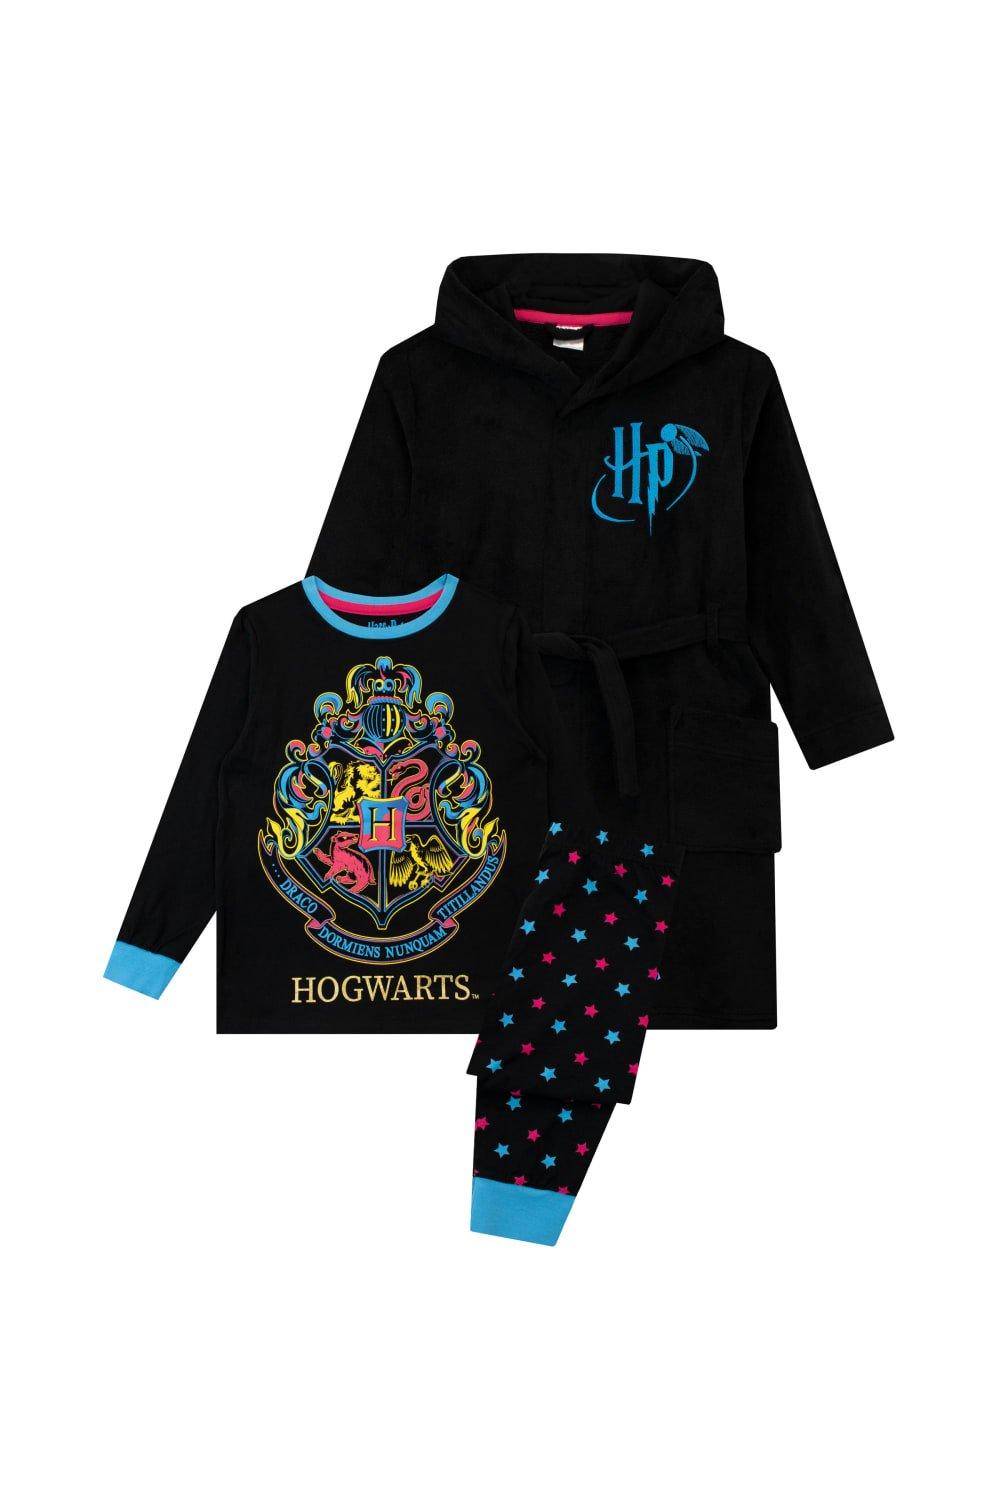 Hogwarts Pyjamas And Dressing Gown